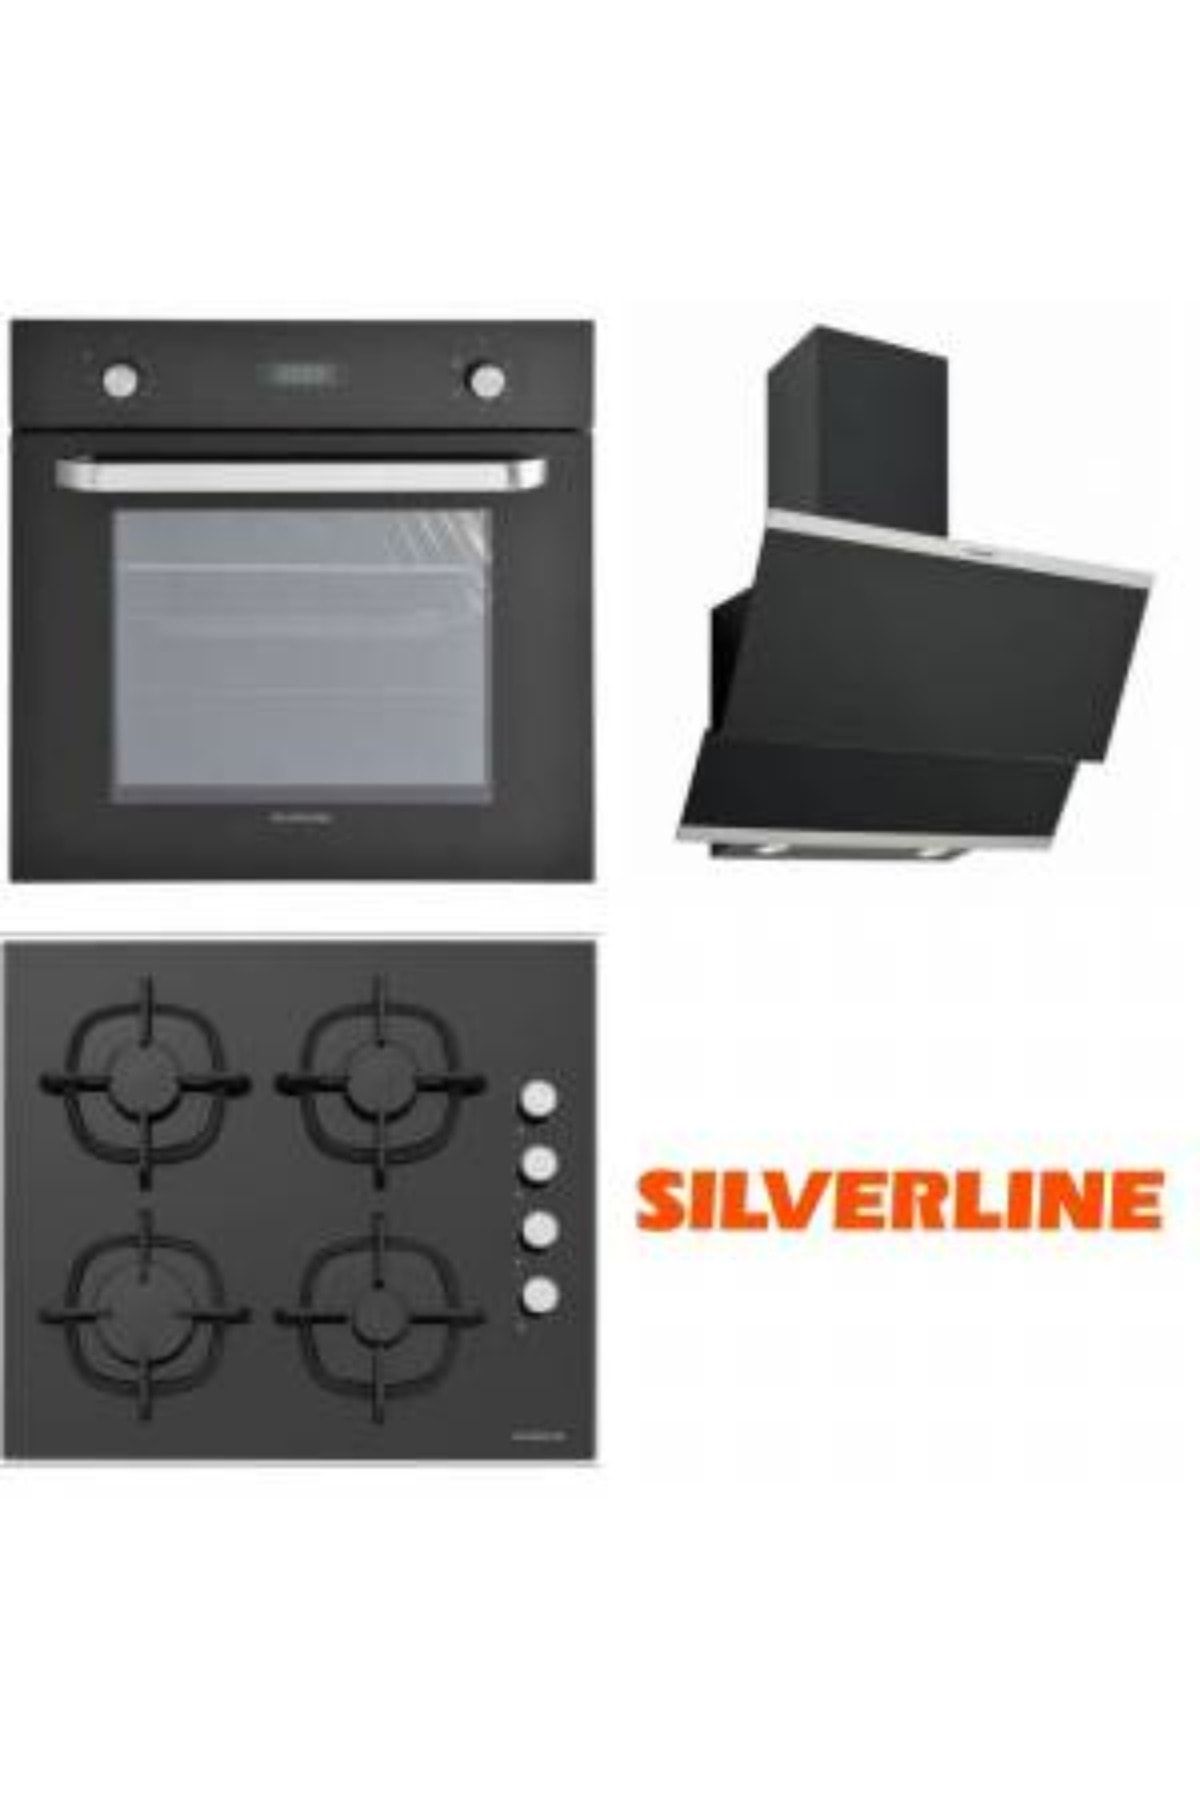 Silverline Siyah Cam Ankastre Set BO6024b01-CS5335B01-3420 Classy